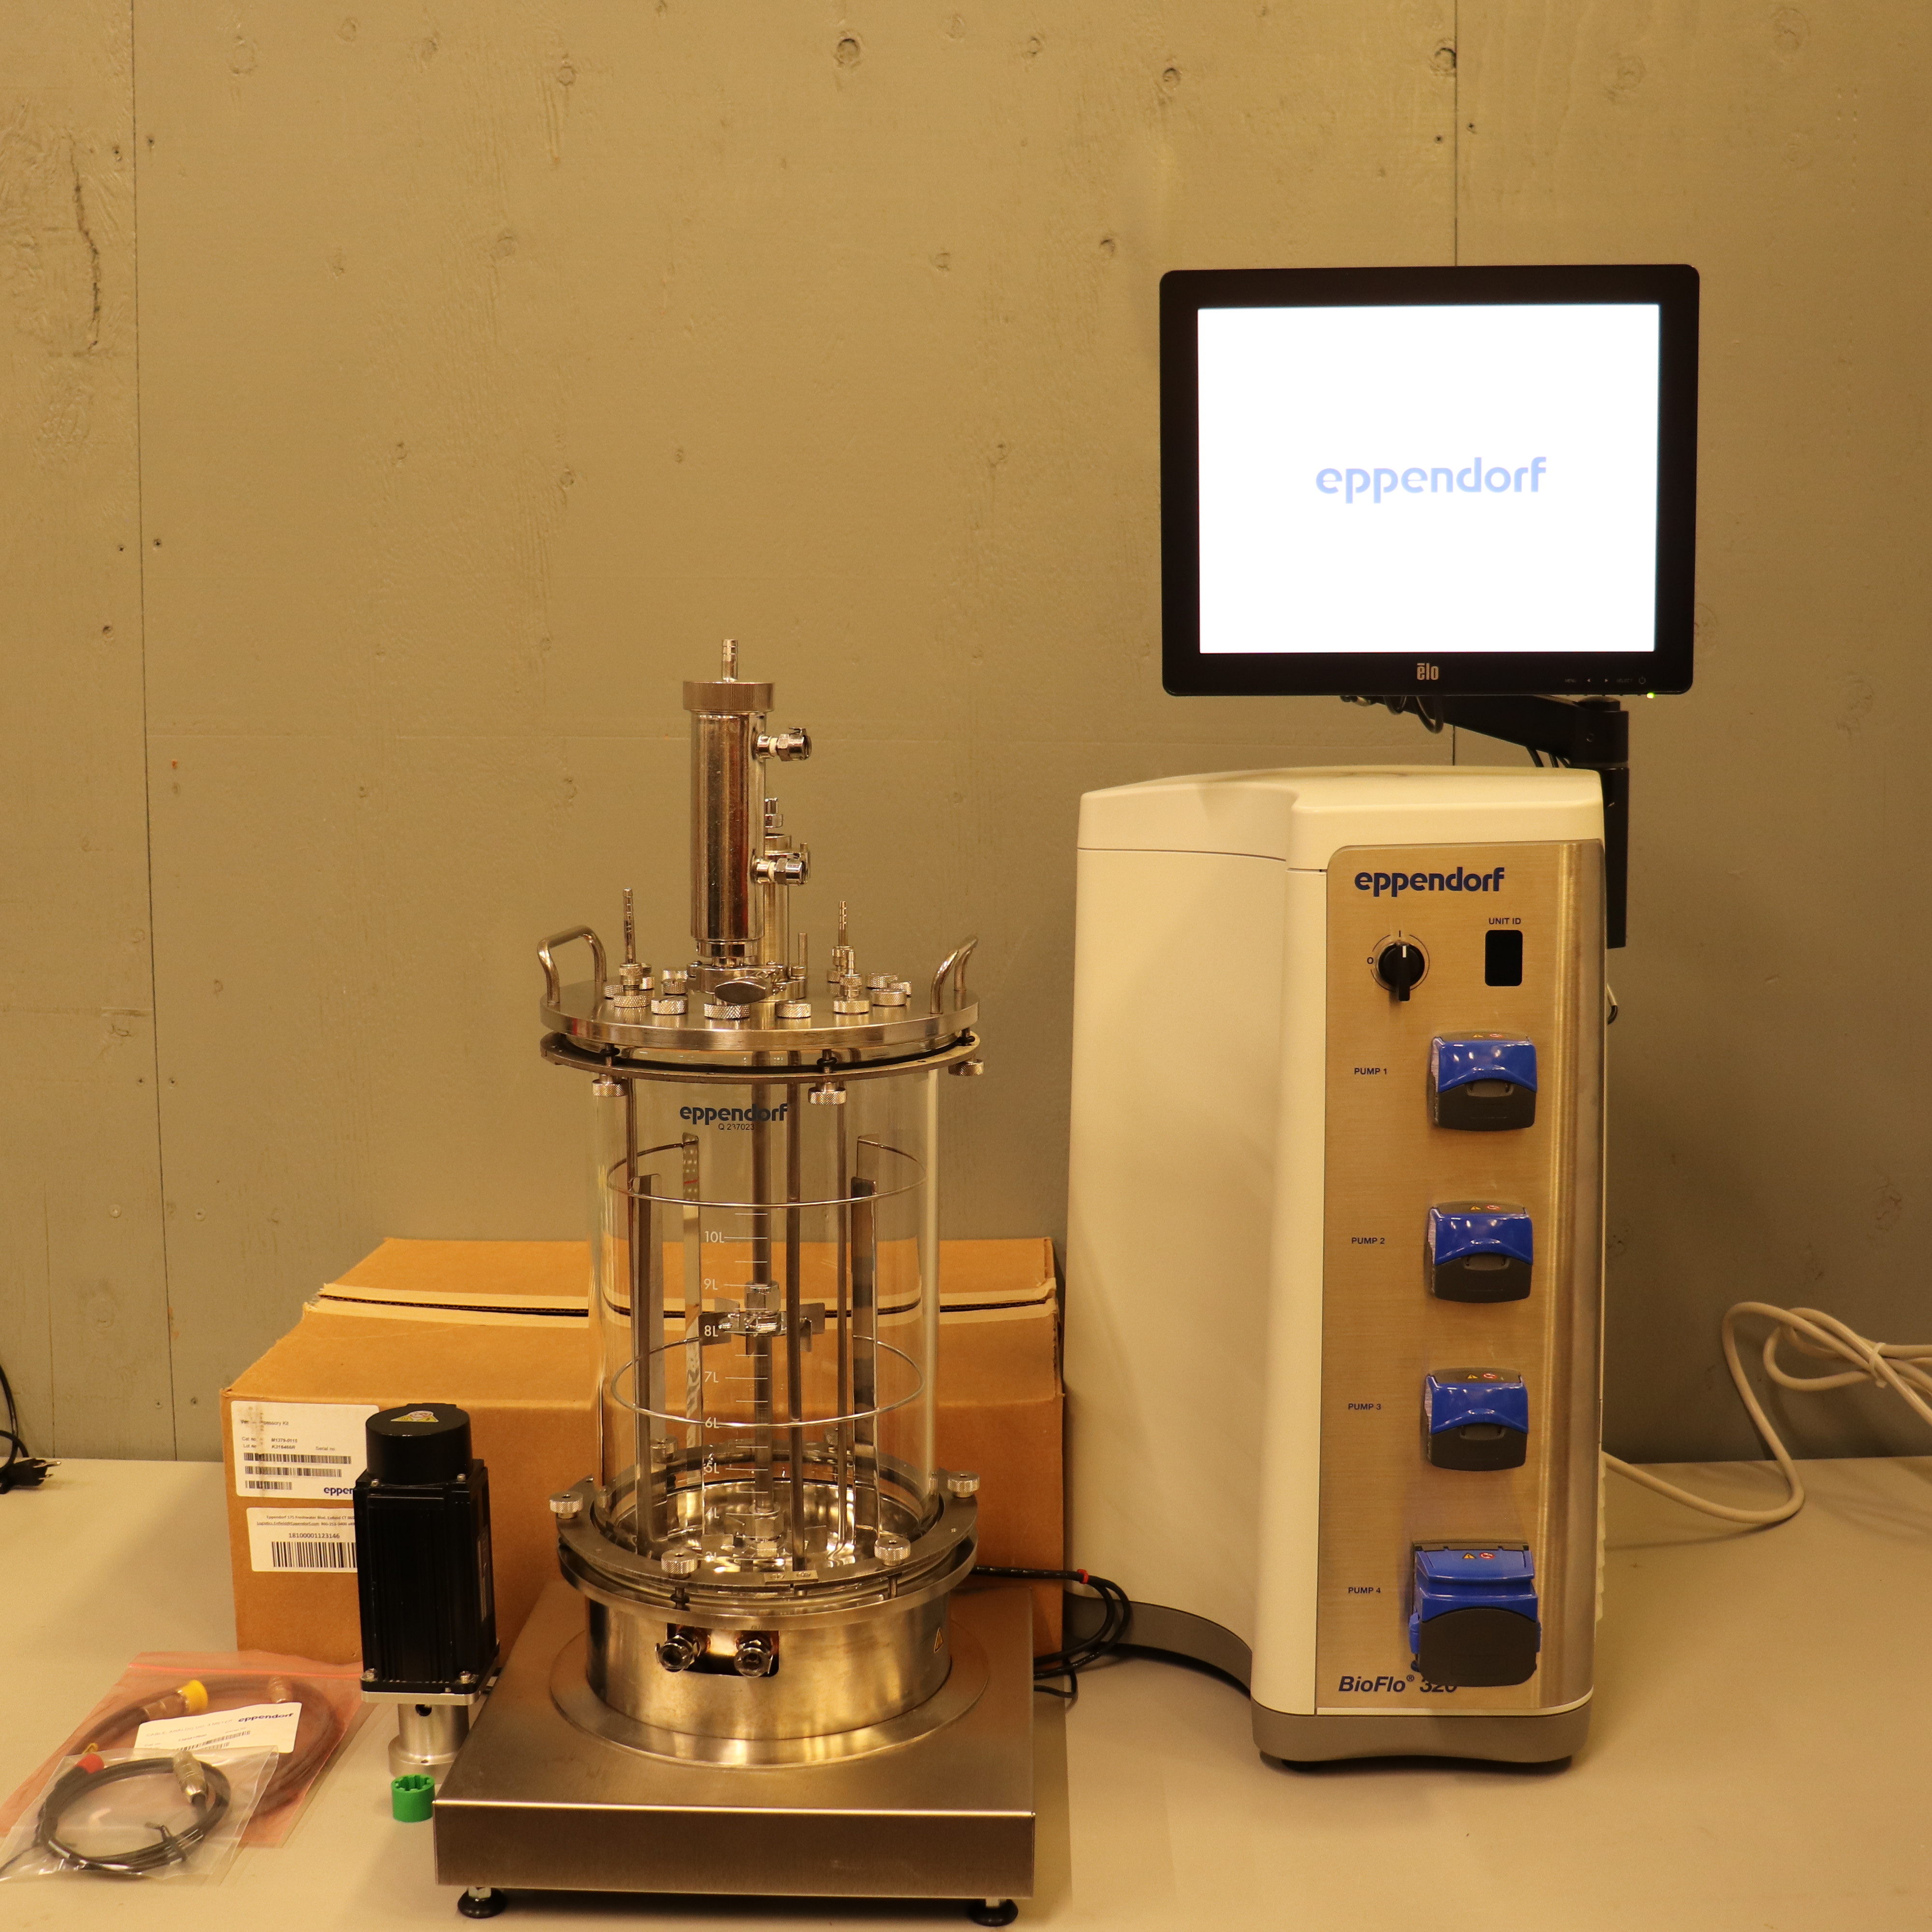 Eppendorf BioFlo 320 Bioprocess Control Station Fermenter Bioreactor w/ 10L Vessel